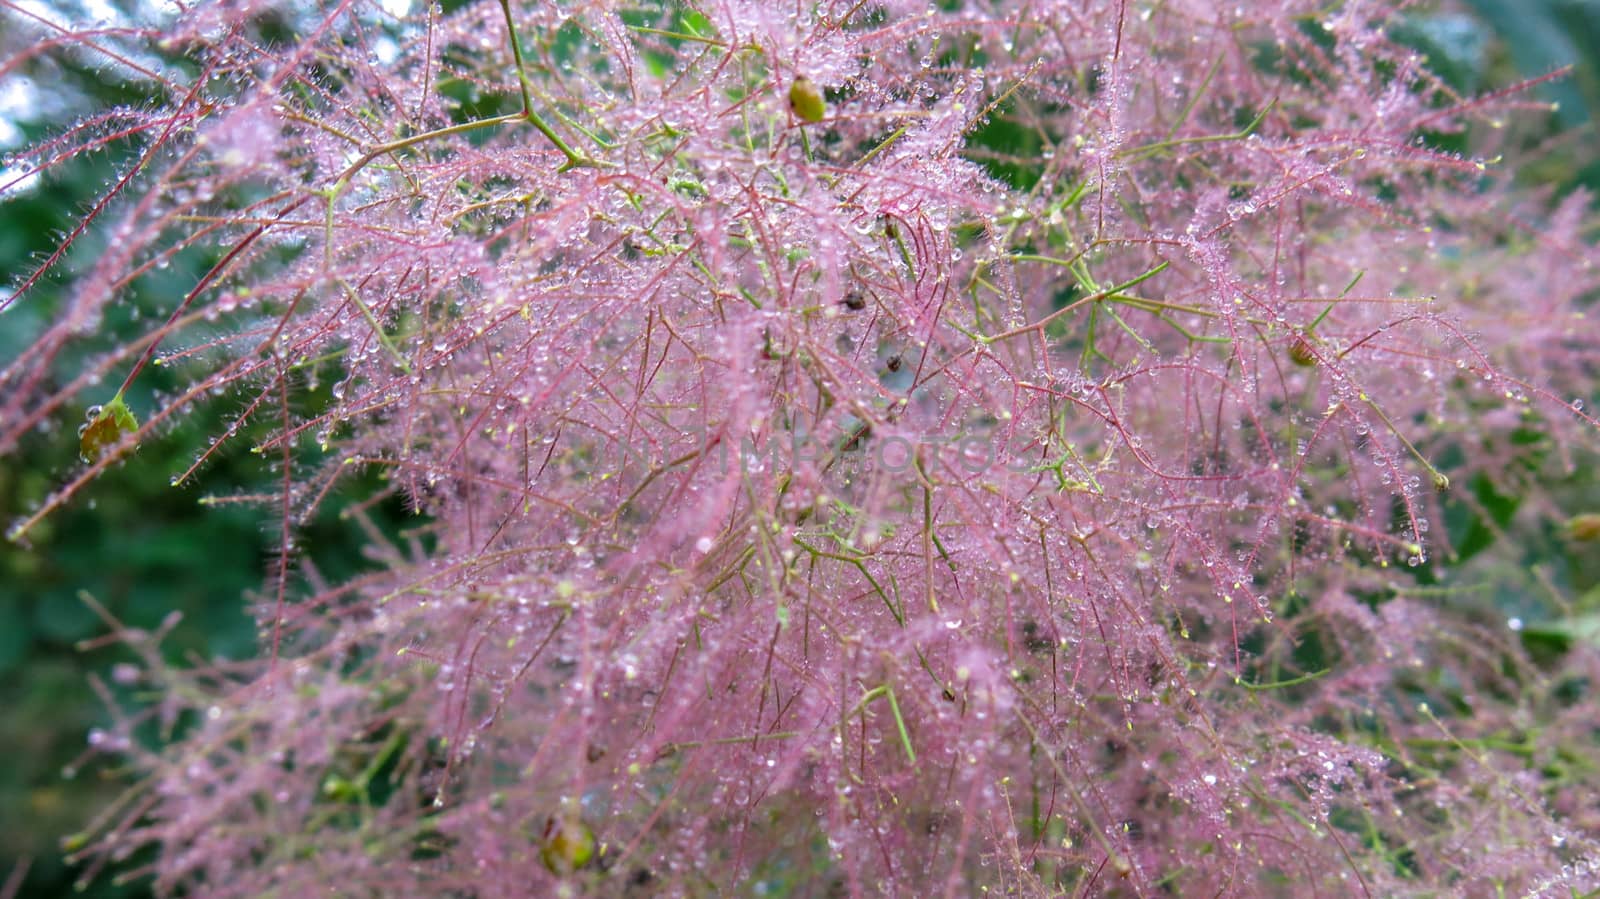 dew drops on flowers. Raindrops stuck on plant twigs by Sanatana2008